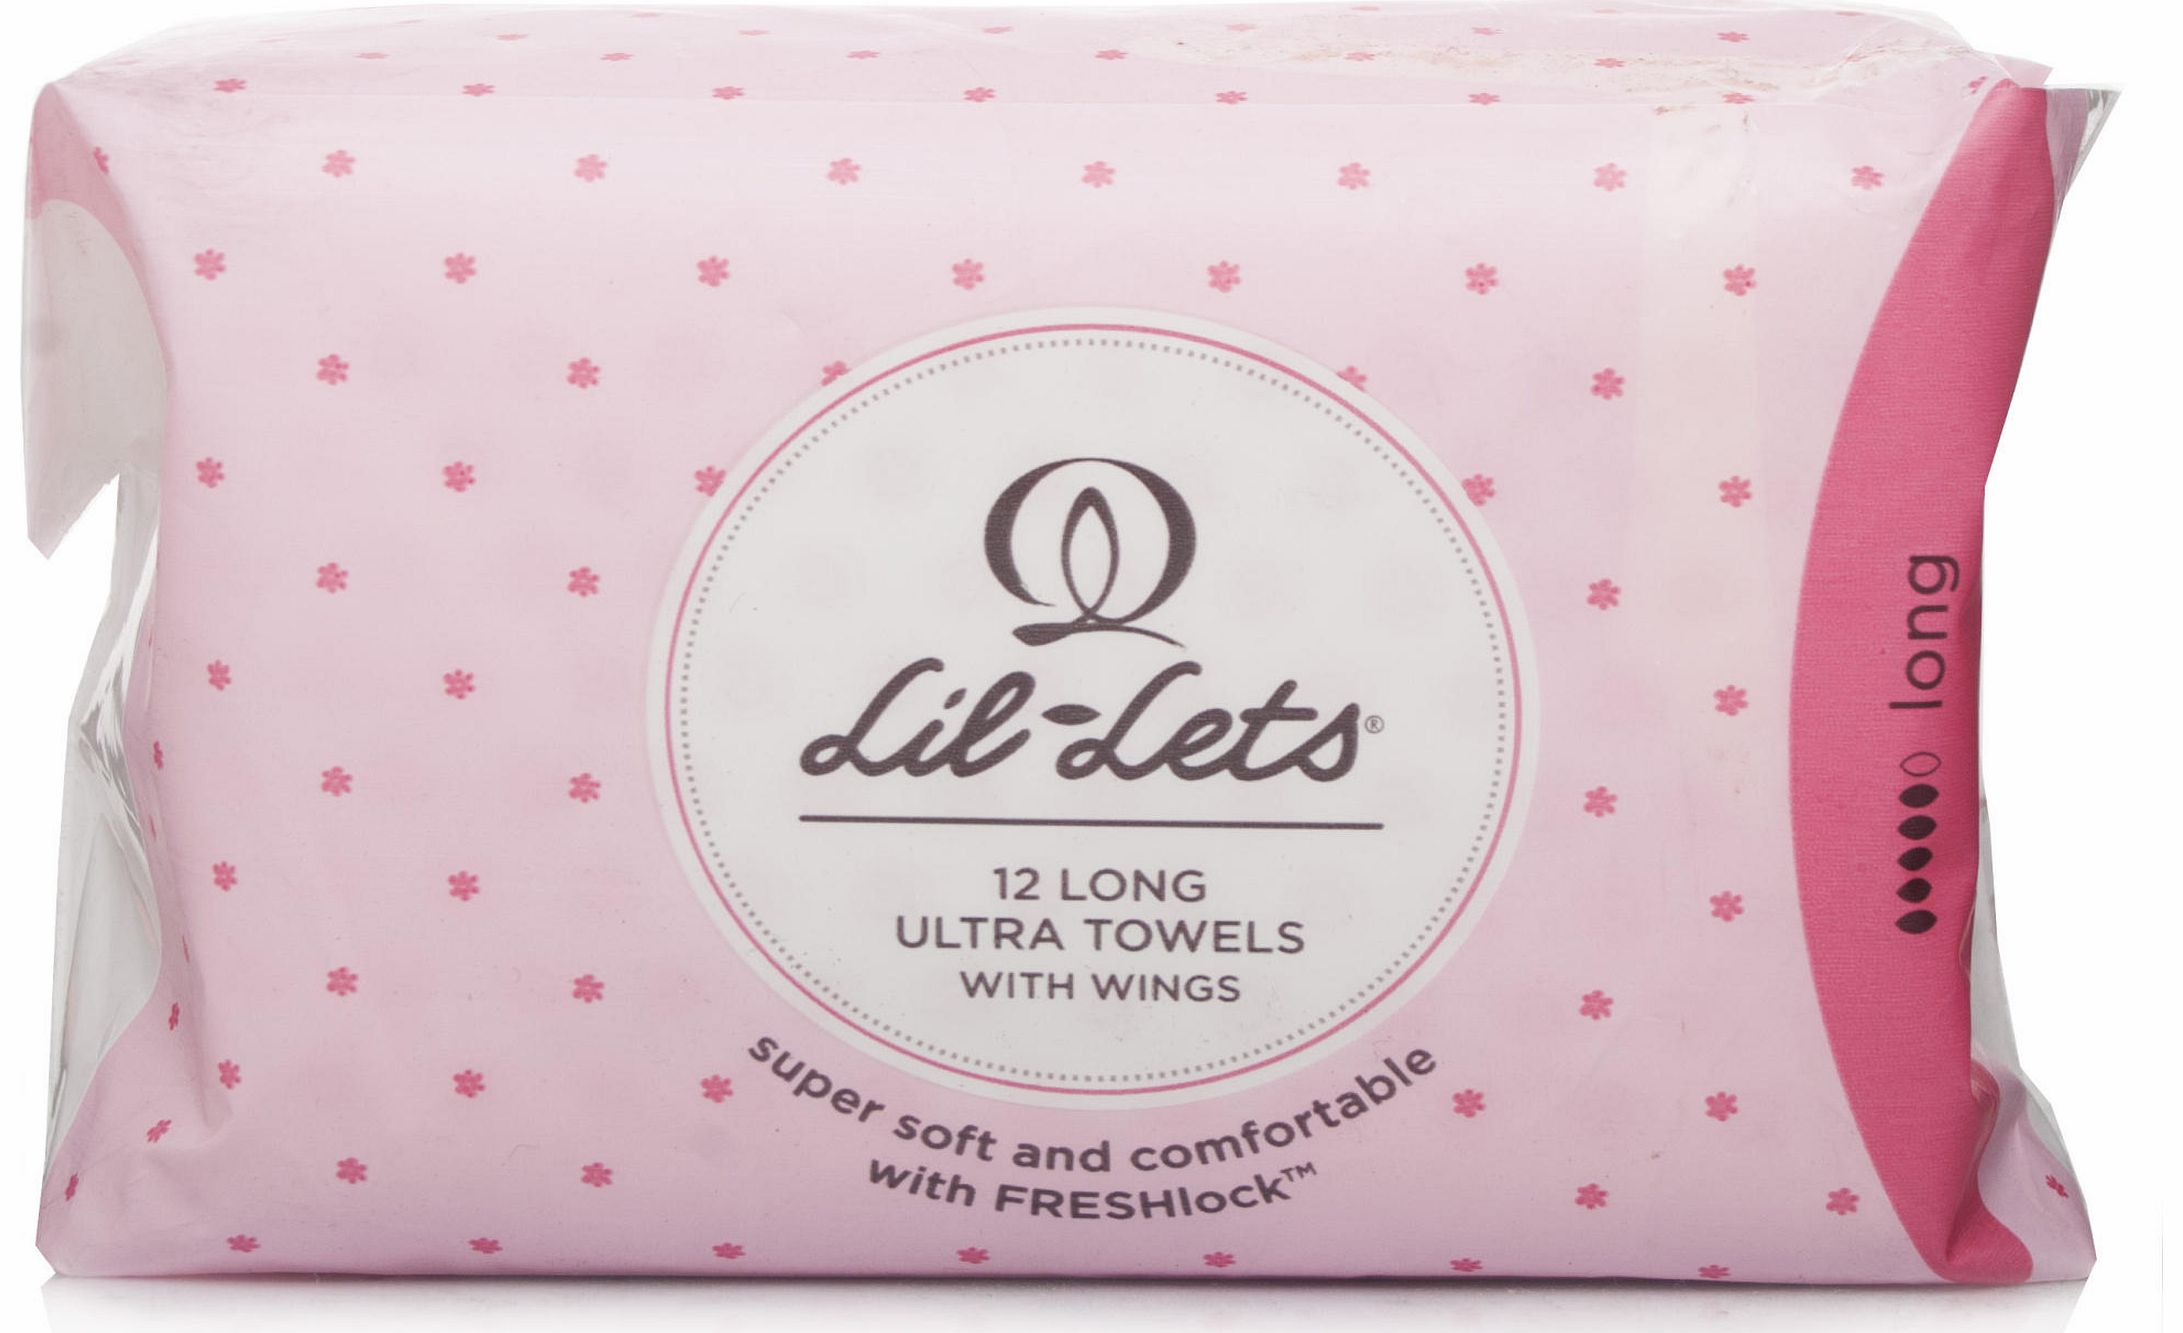 Fresh Lock Ultra Towels - Long